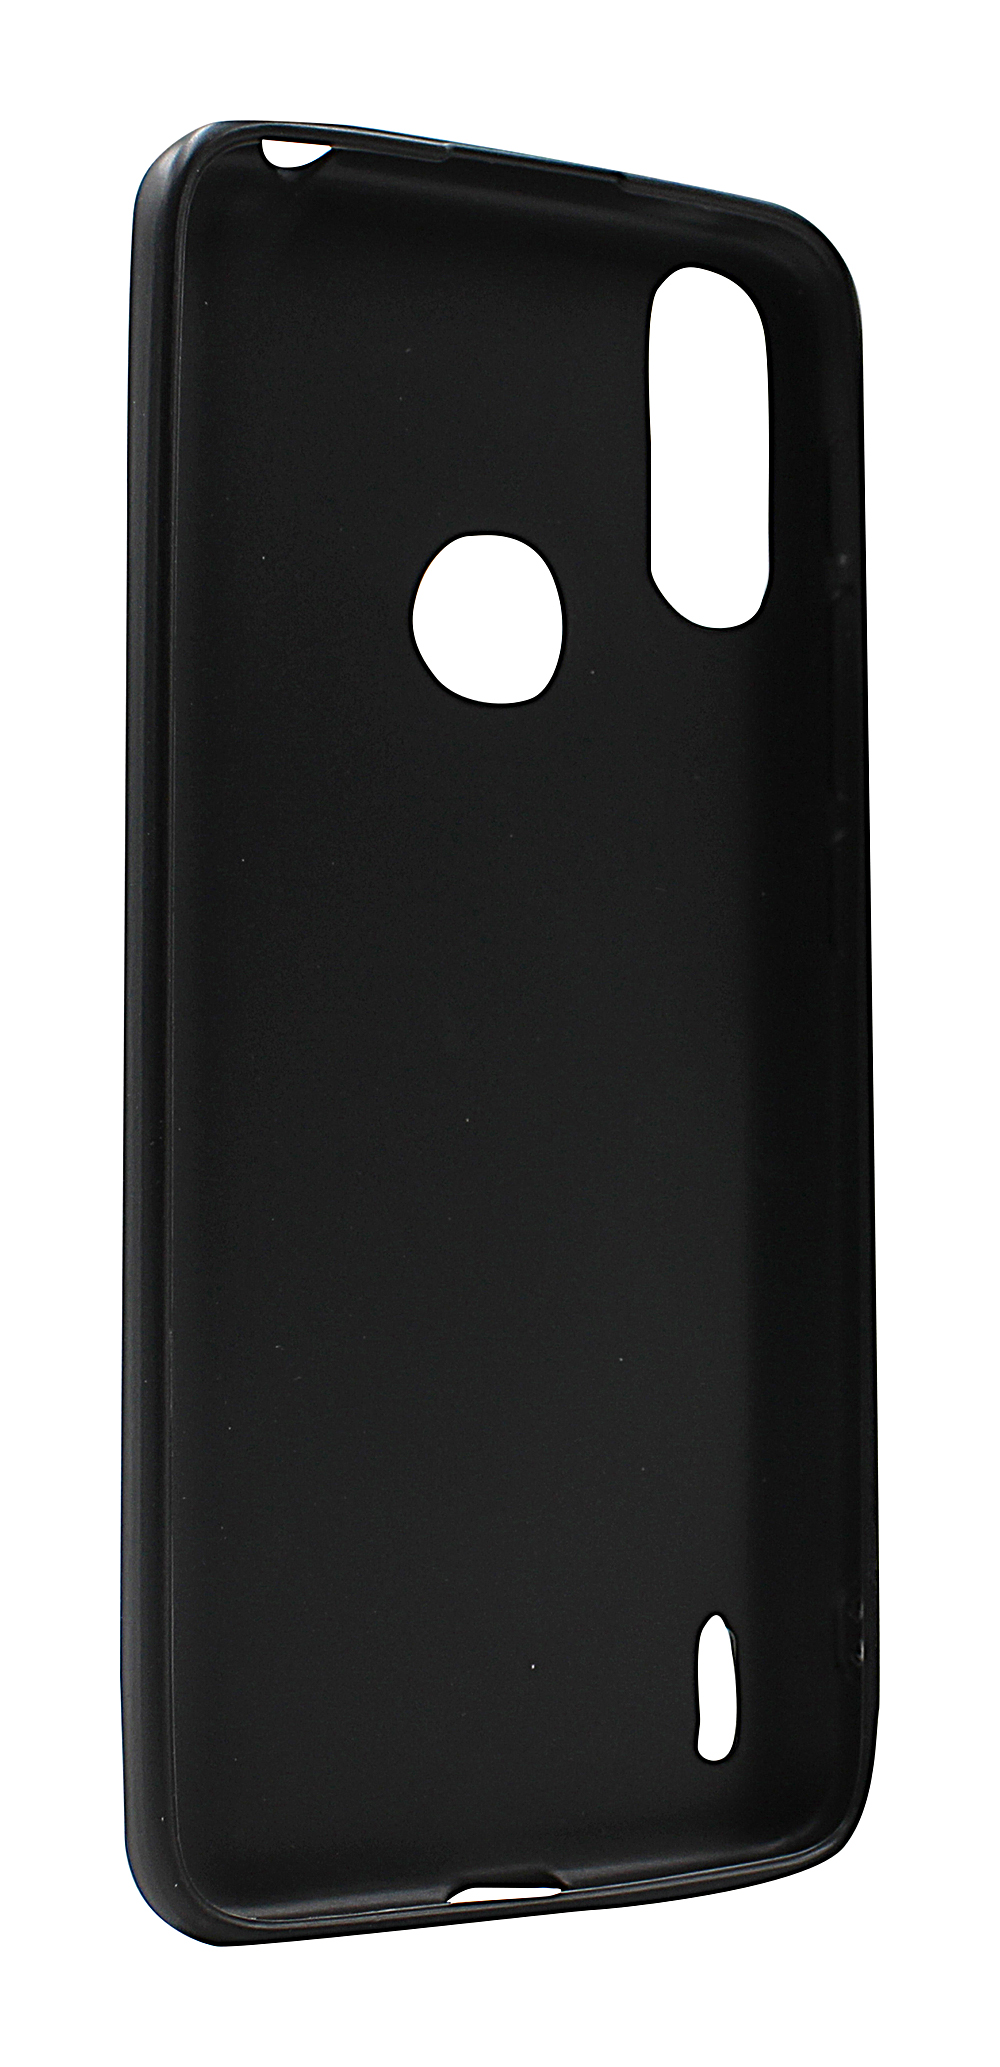 Skimblocker Magnet Wallet Motorola Moto E7i Power